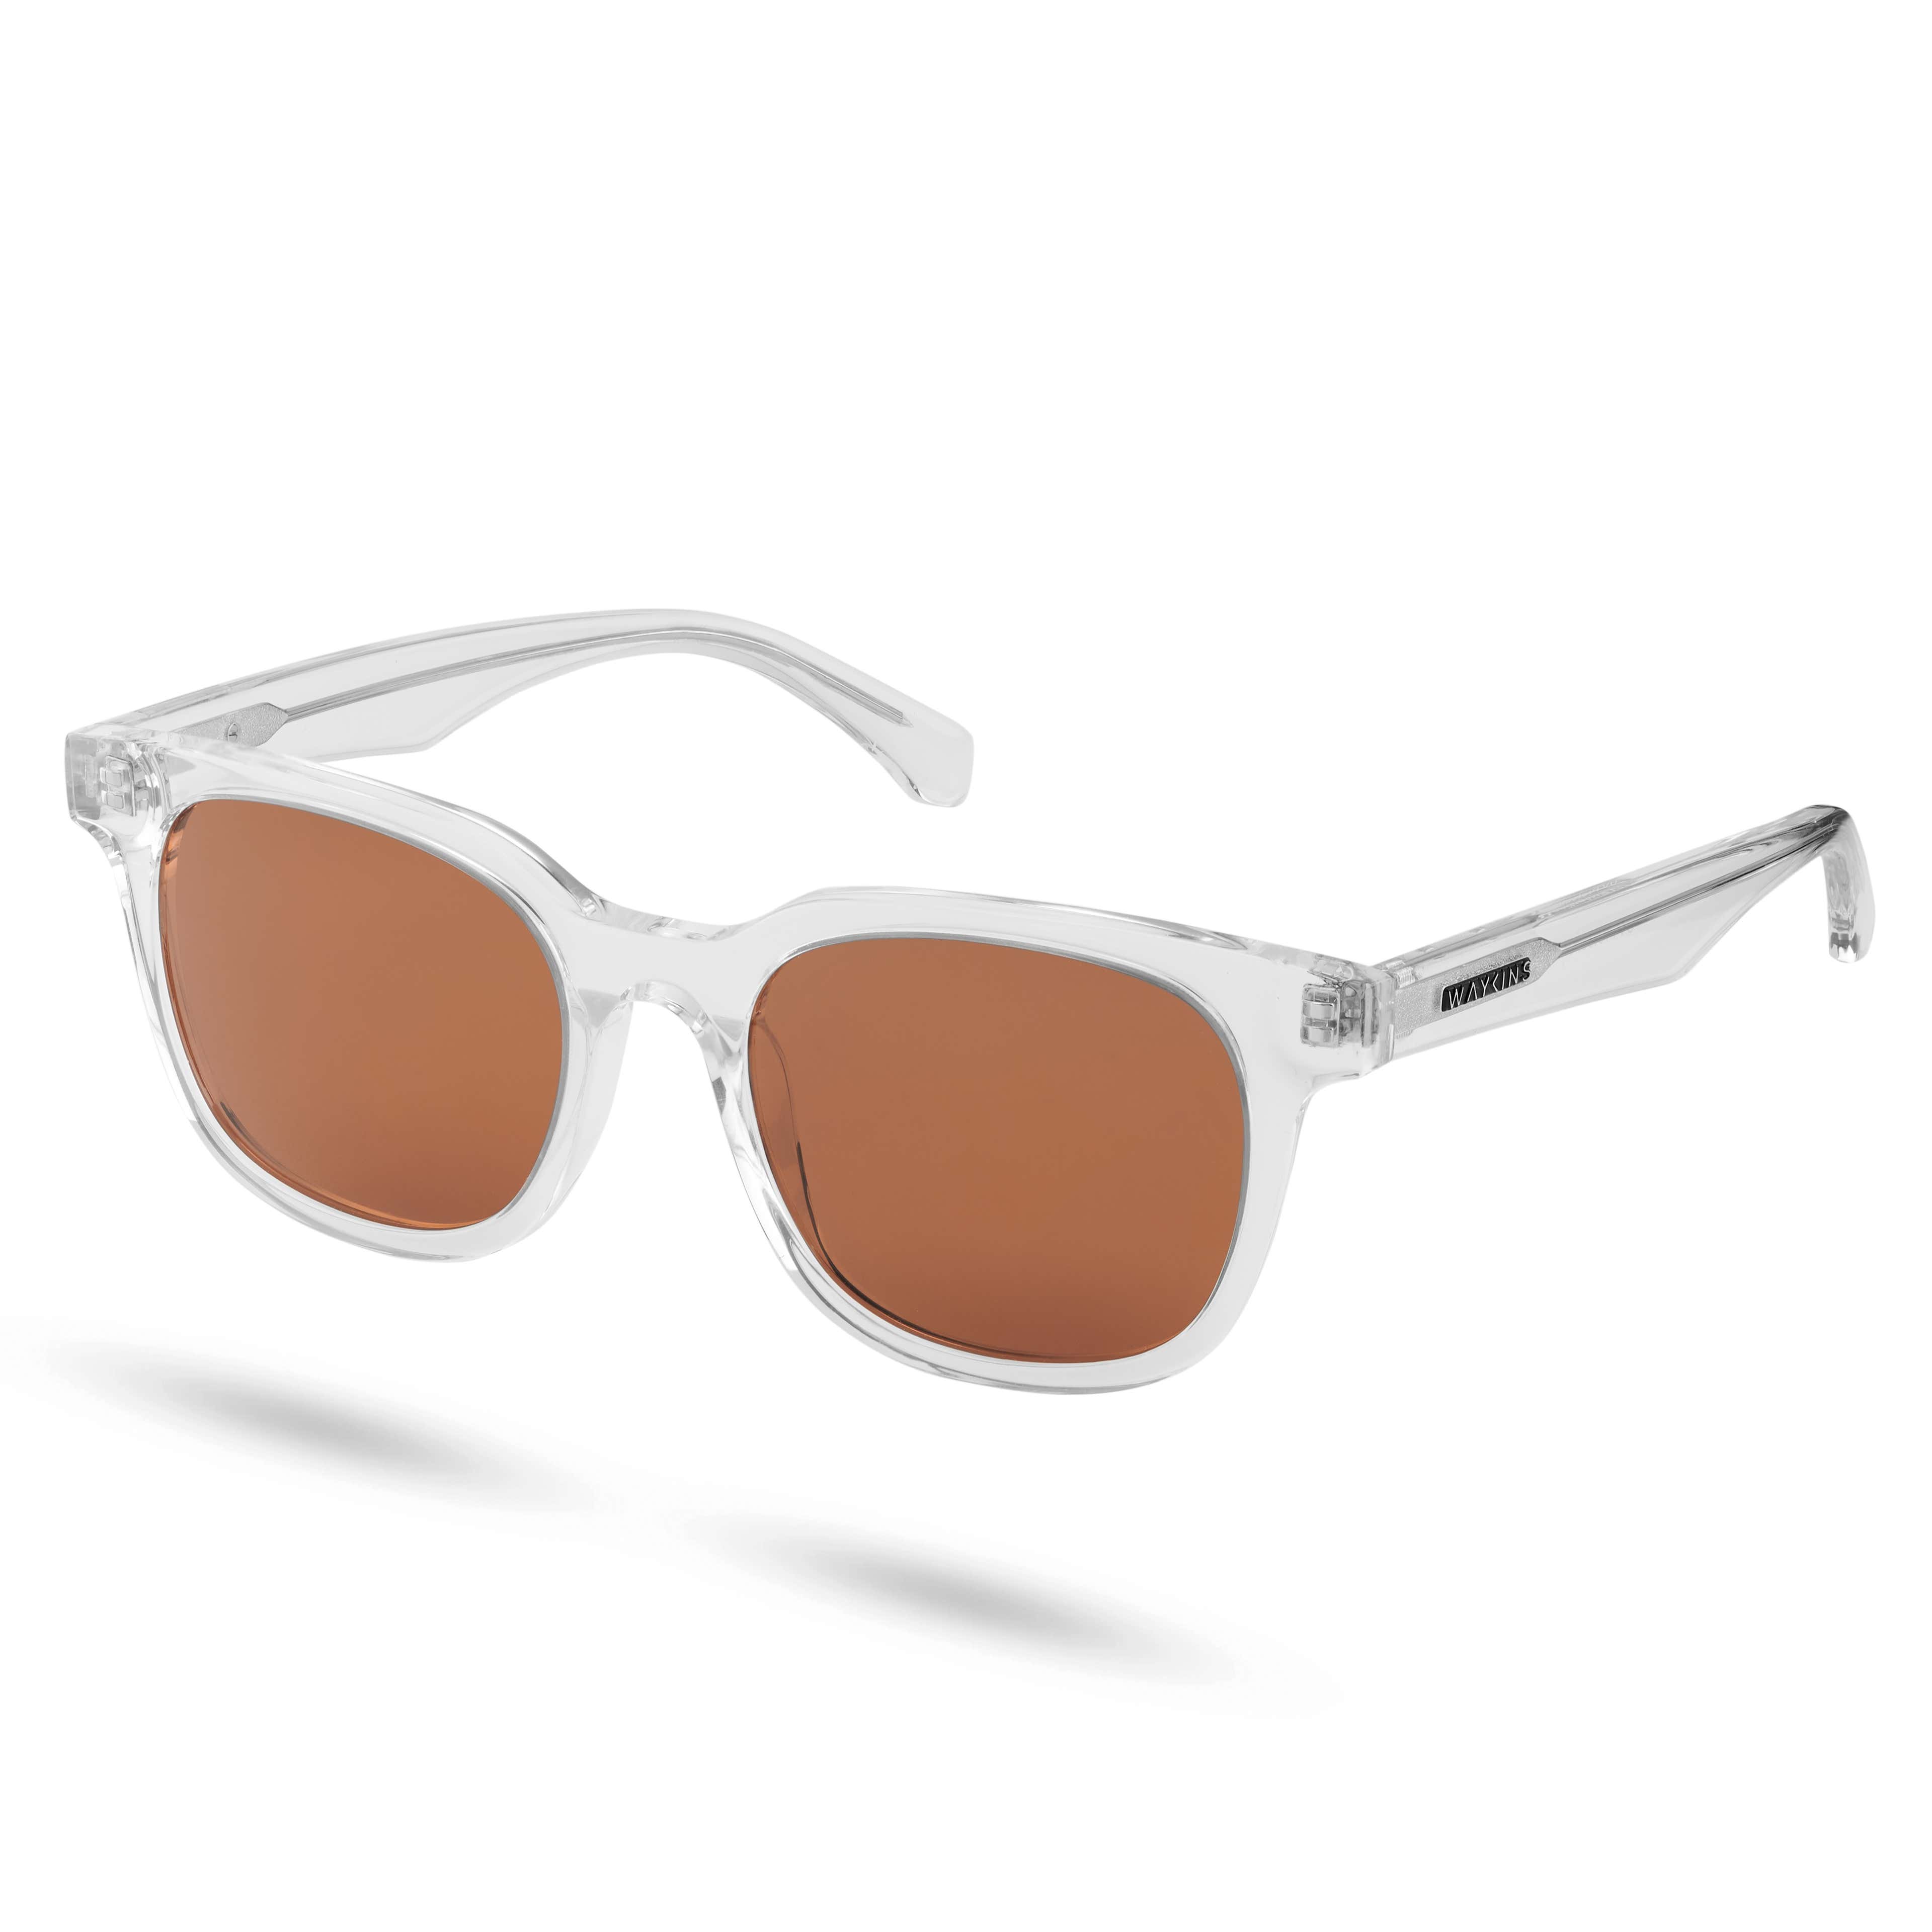 Wilder Thea Clear & Brown Polarized Sunglasses